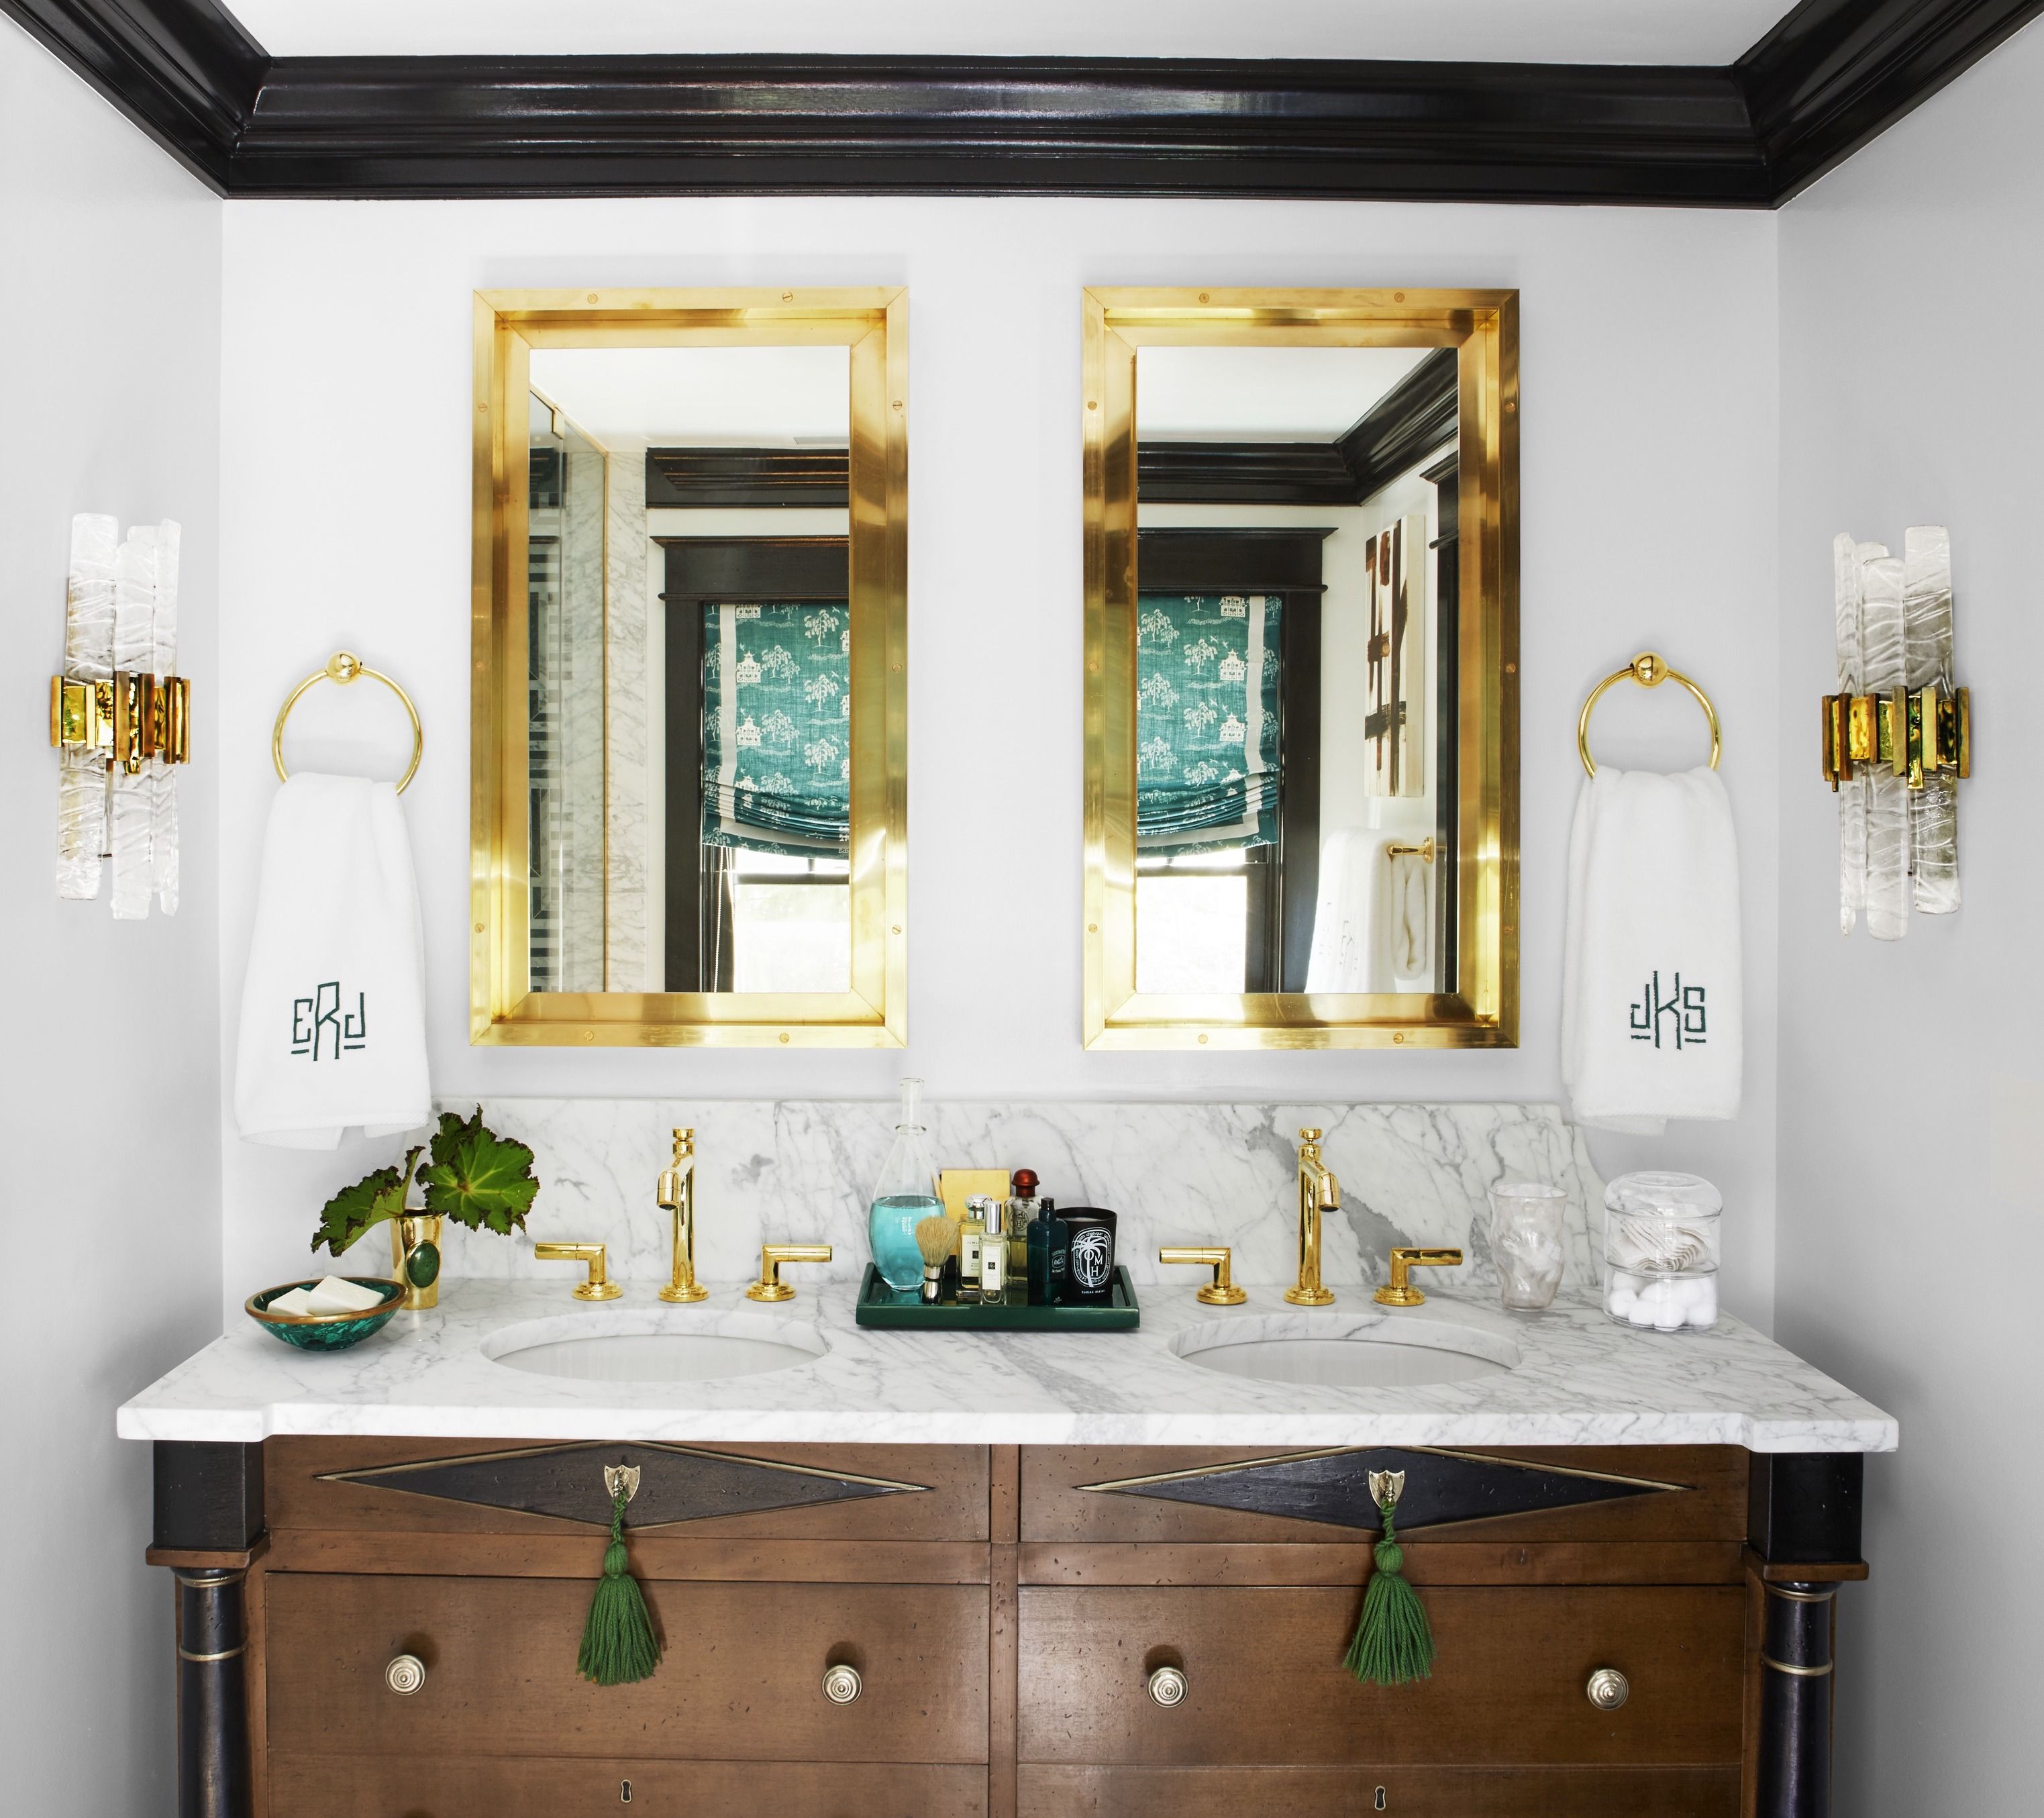 50 Bathroom Decorating Ideas Pictures Of Bathroom Decor And Designs,Interior Design Assistant Salary